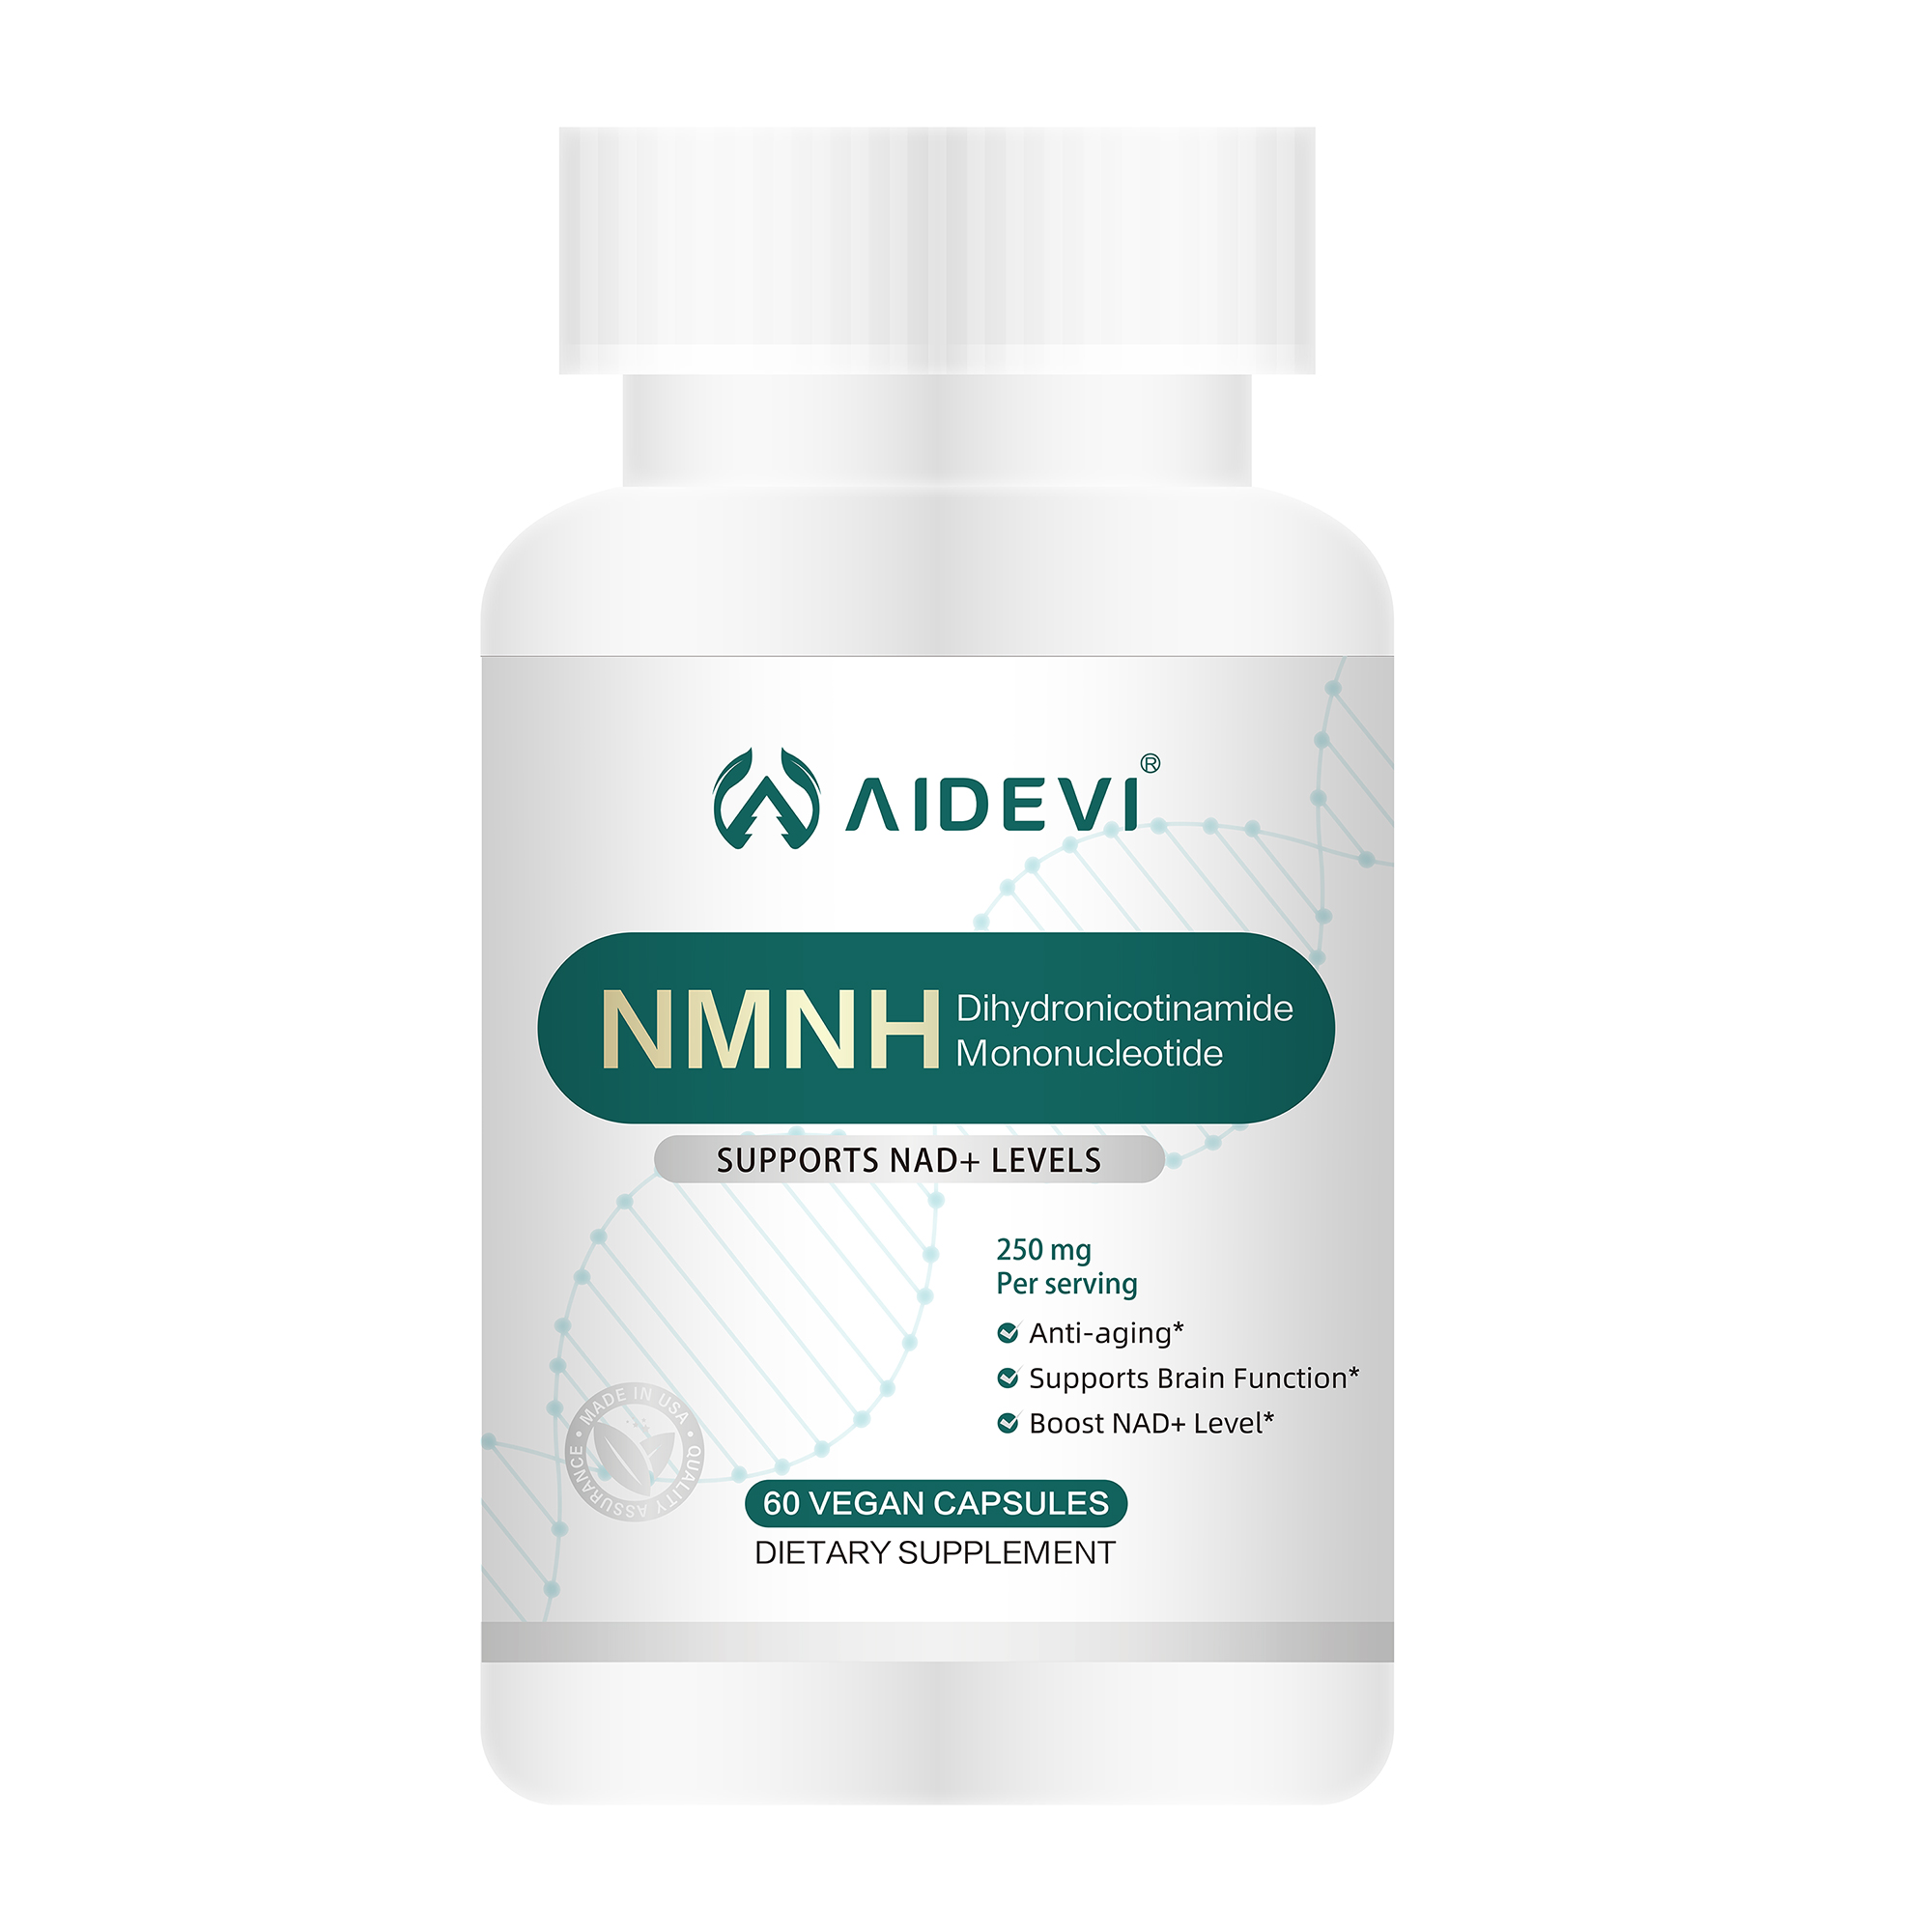 NMNH可以提高细胞的NADH水平吗？